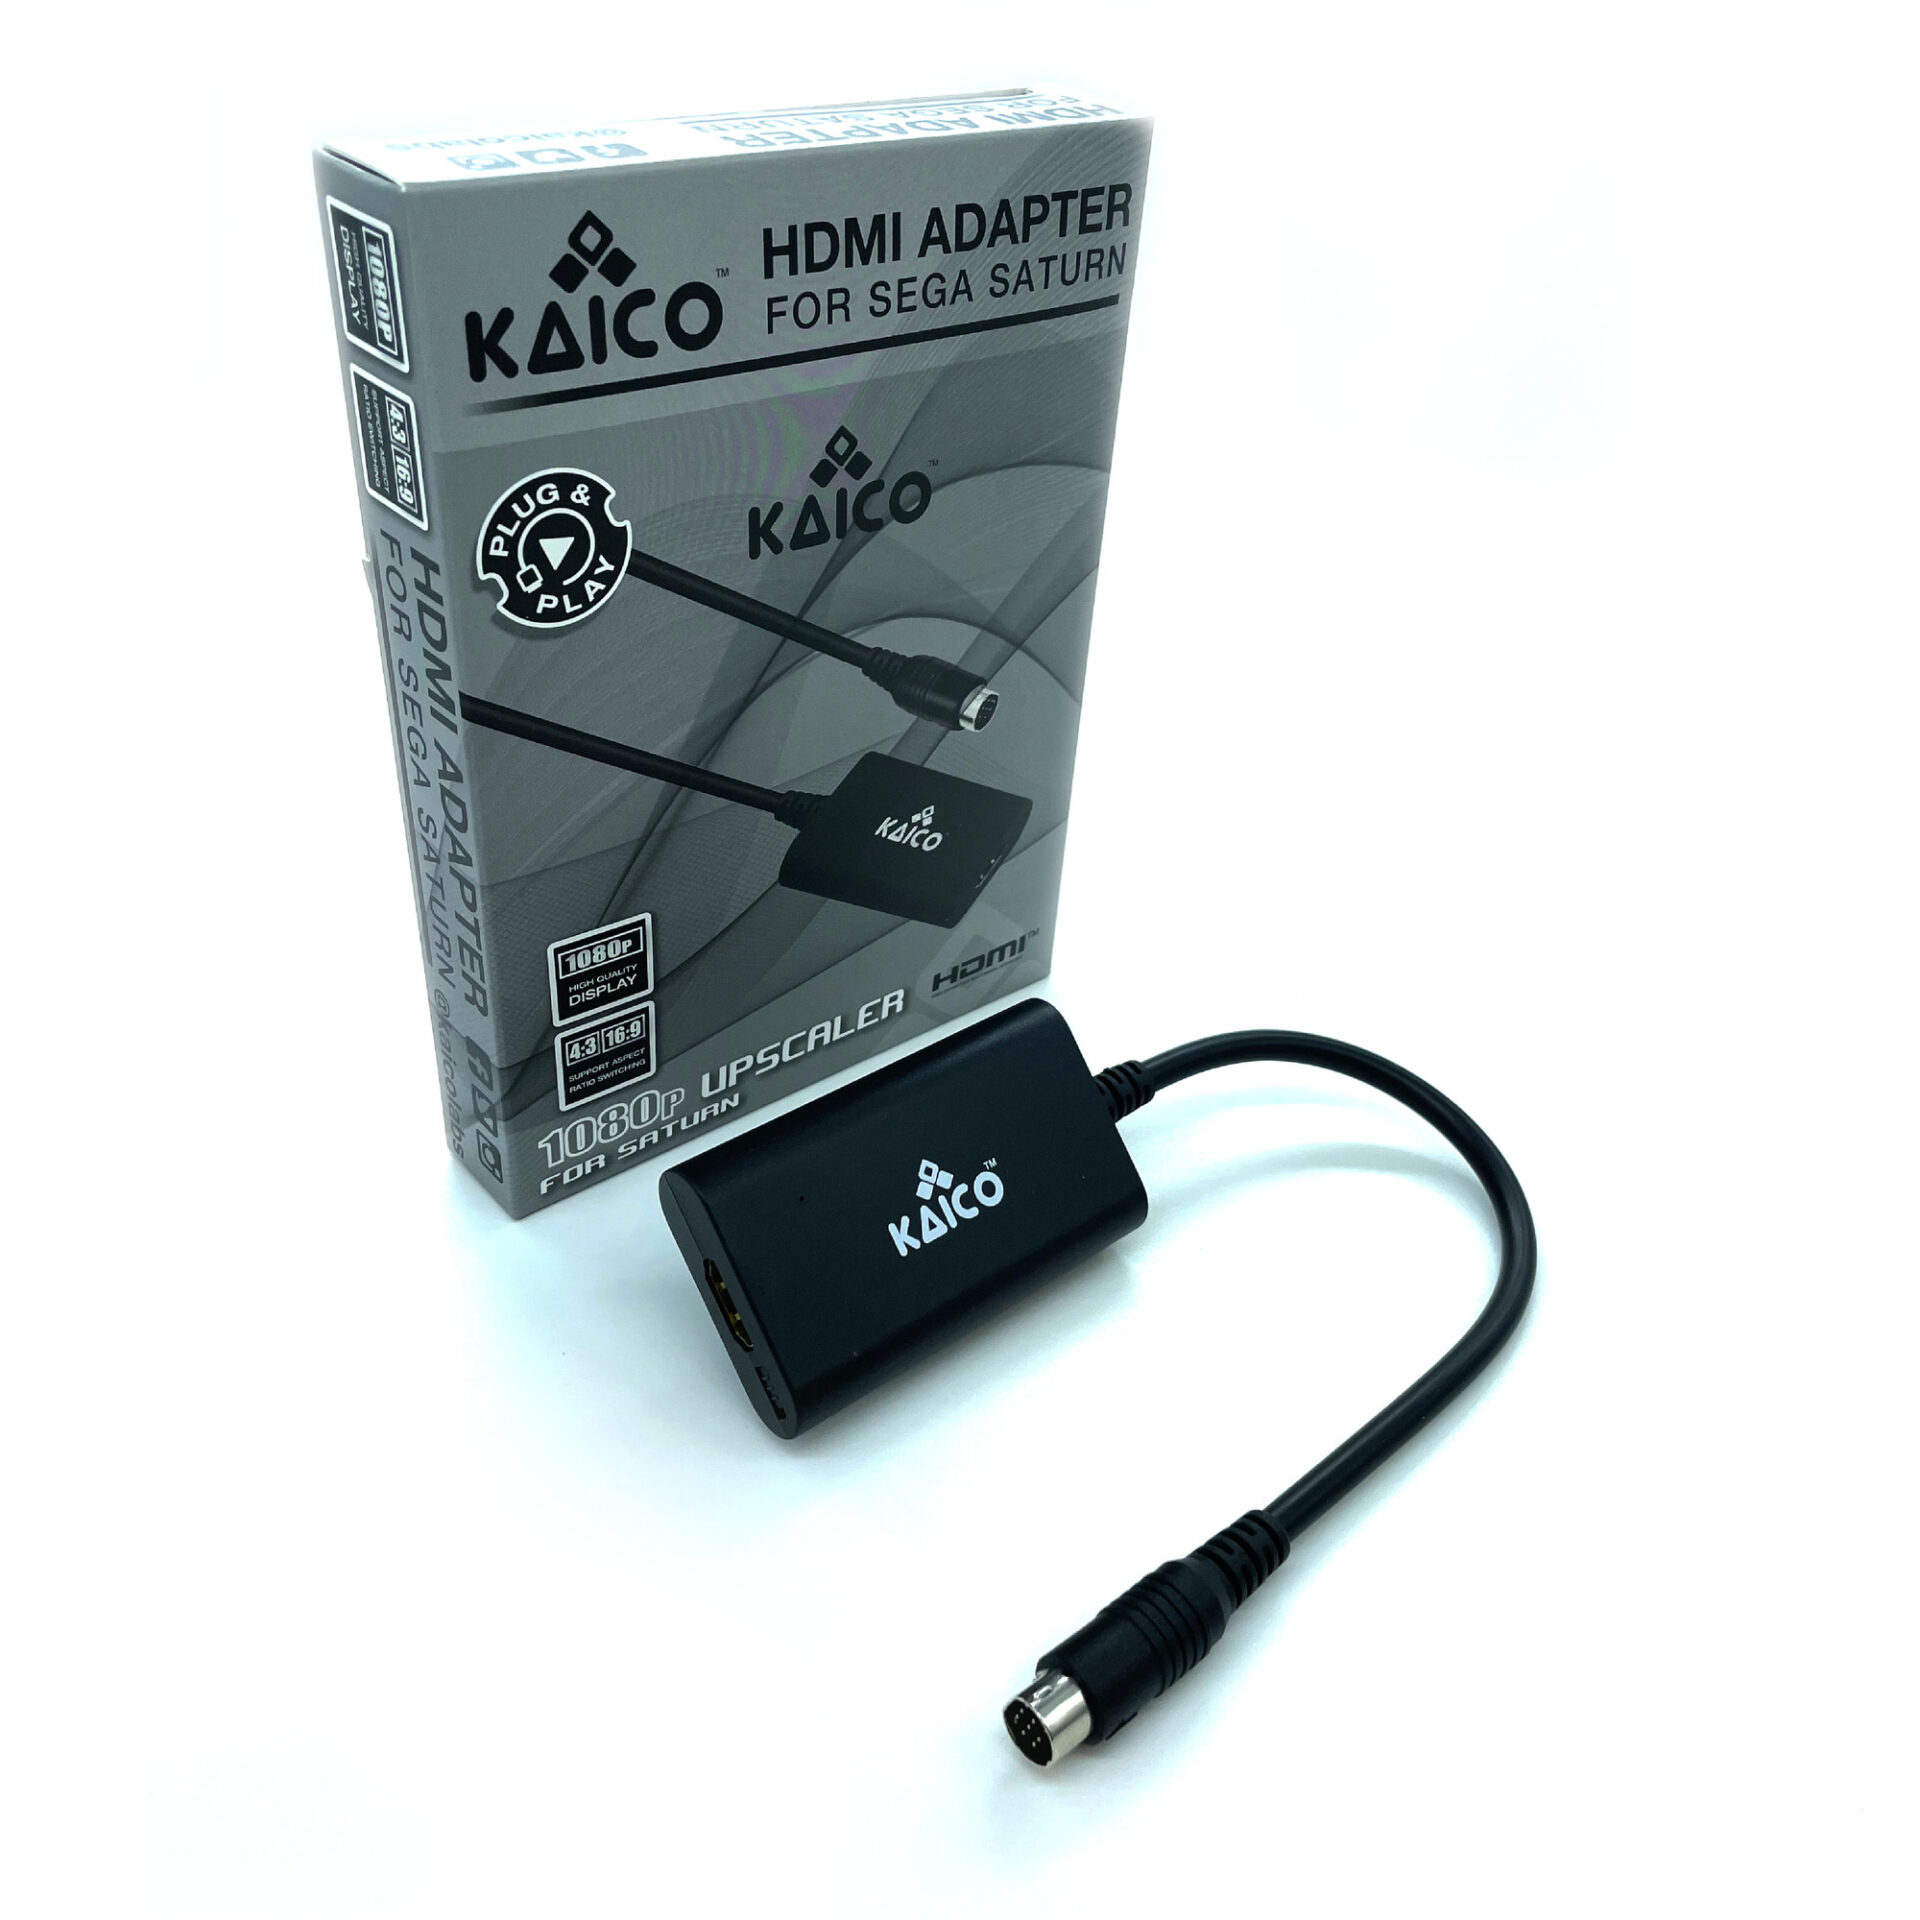 Kaico SEGA Saturn 1080p HDMI Adapter - For use Sega - Supports S Video output – PAL NTSC Consoles -